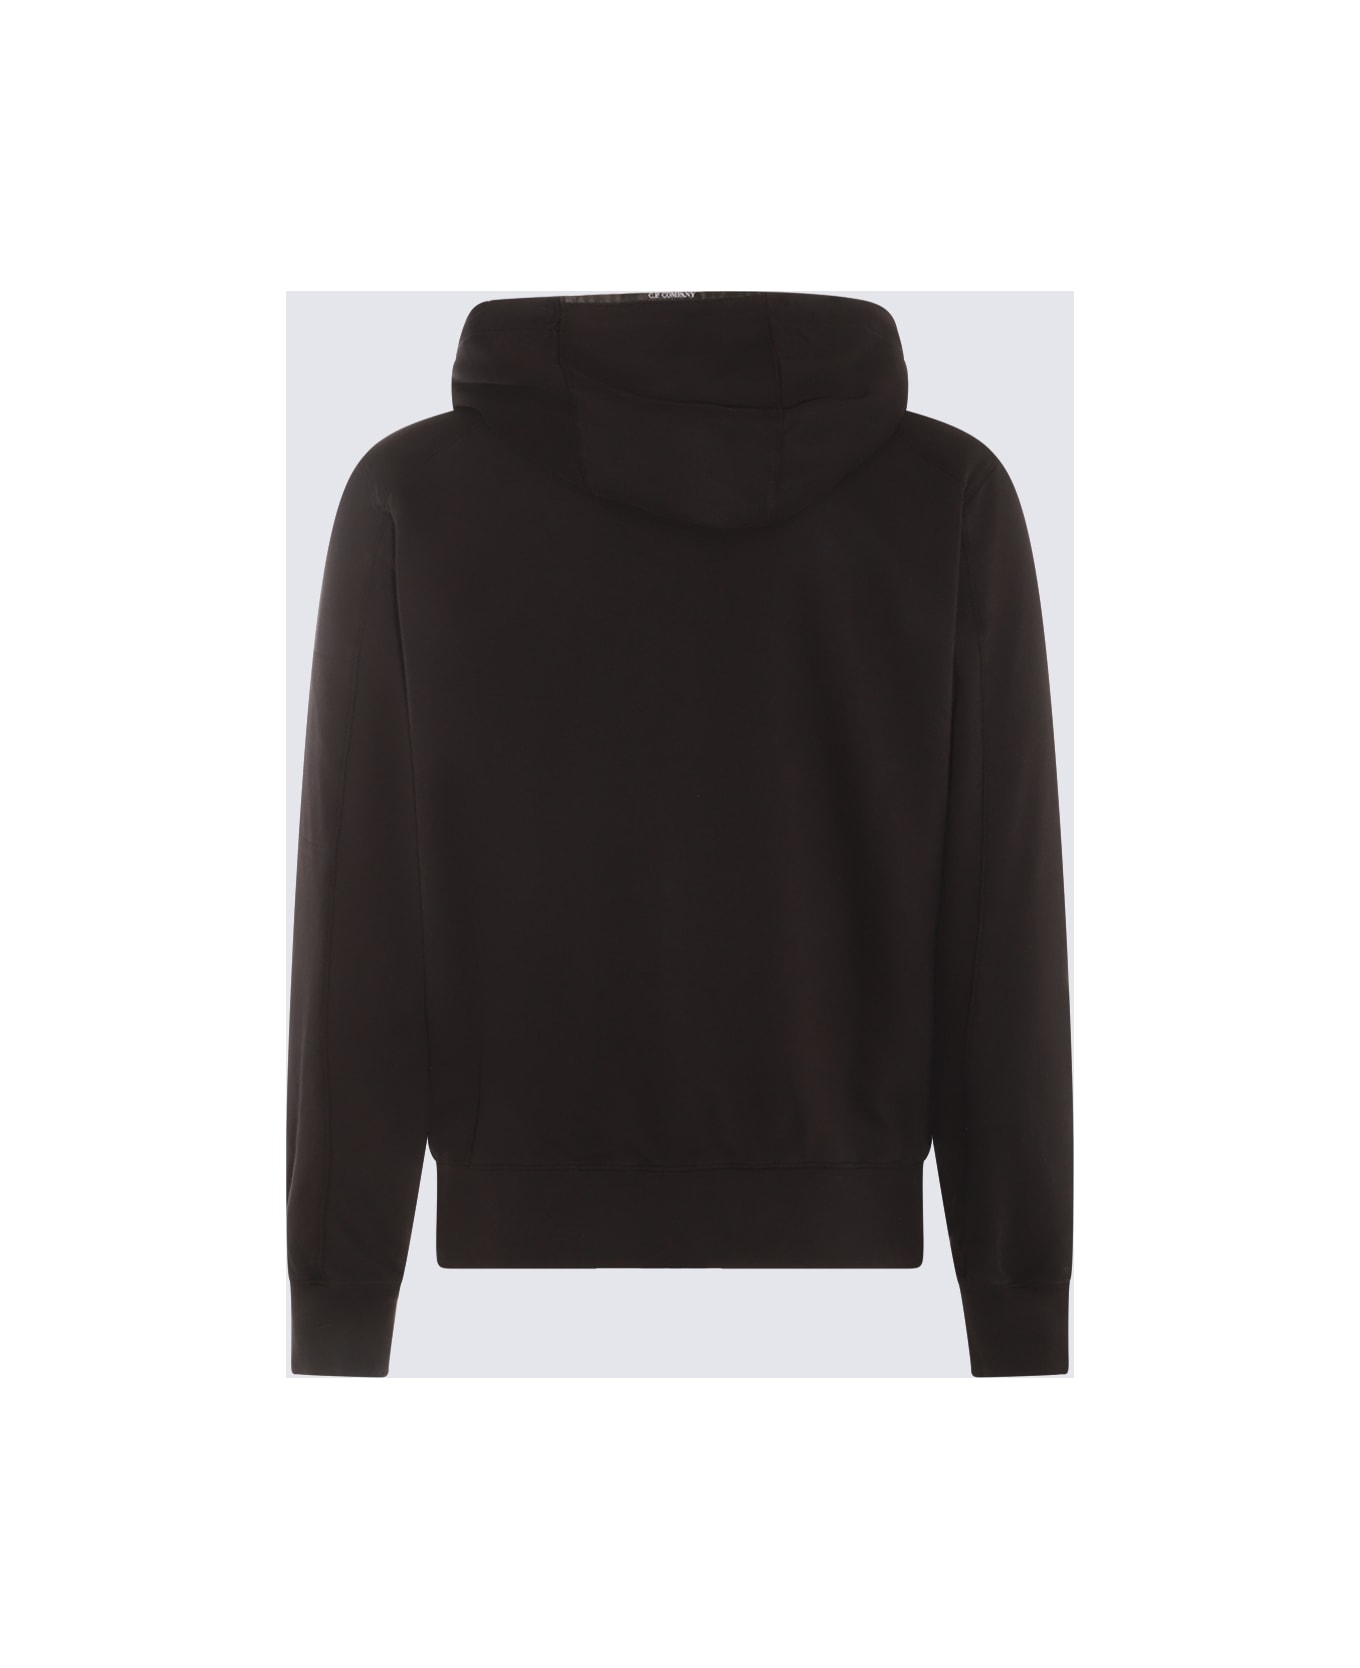 C.P. Company Black Cotton Sweatshirt - Black